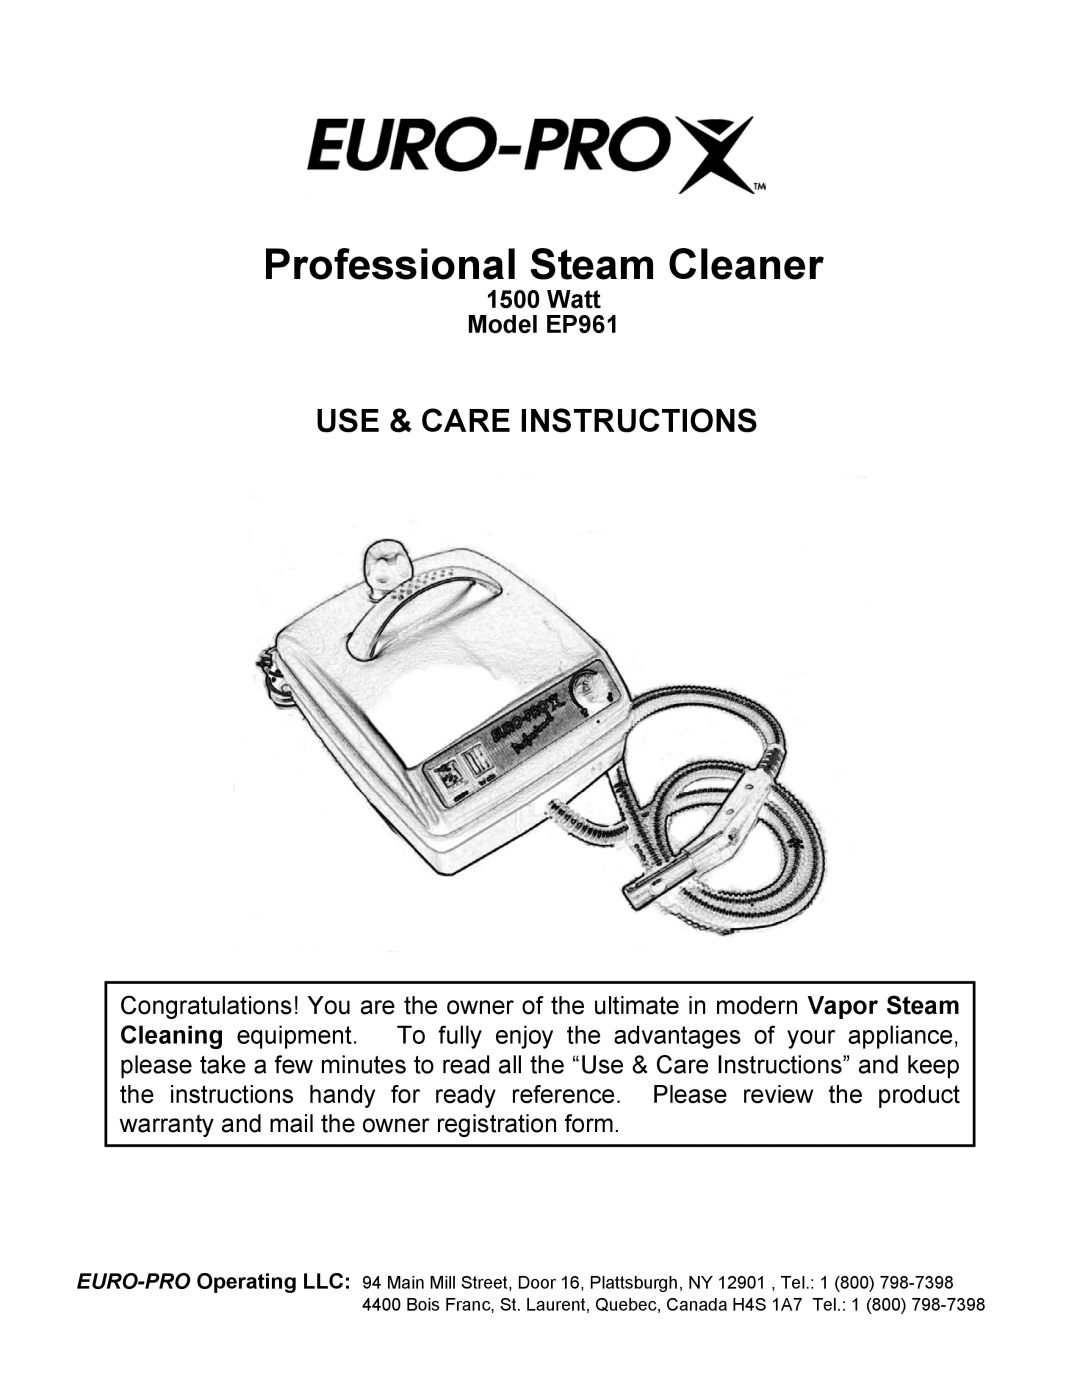 Euro-Pro warranty Professional Steam Cleaner, Use & Care Instructions, Watt Model EP961 